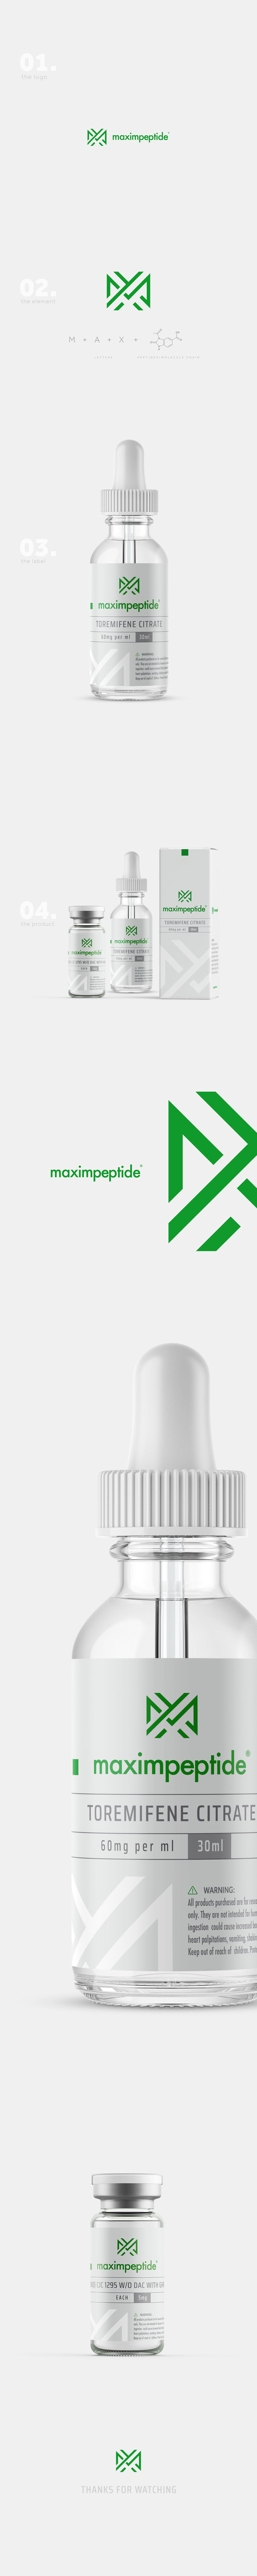 Presentation image showcasing logo design and packaging design for Maxim Peptide